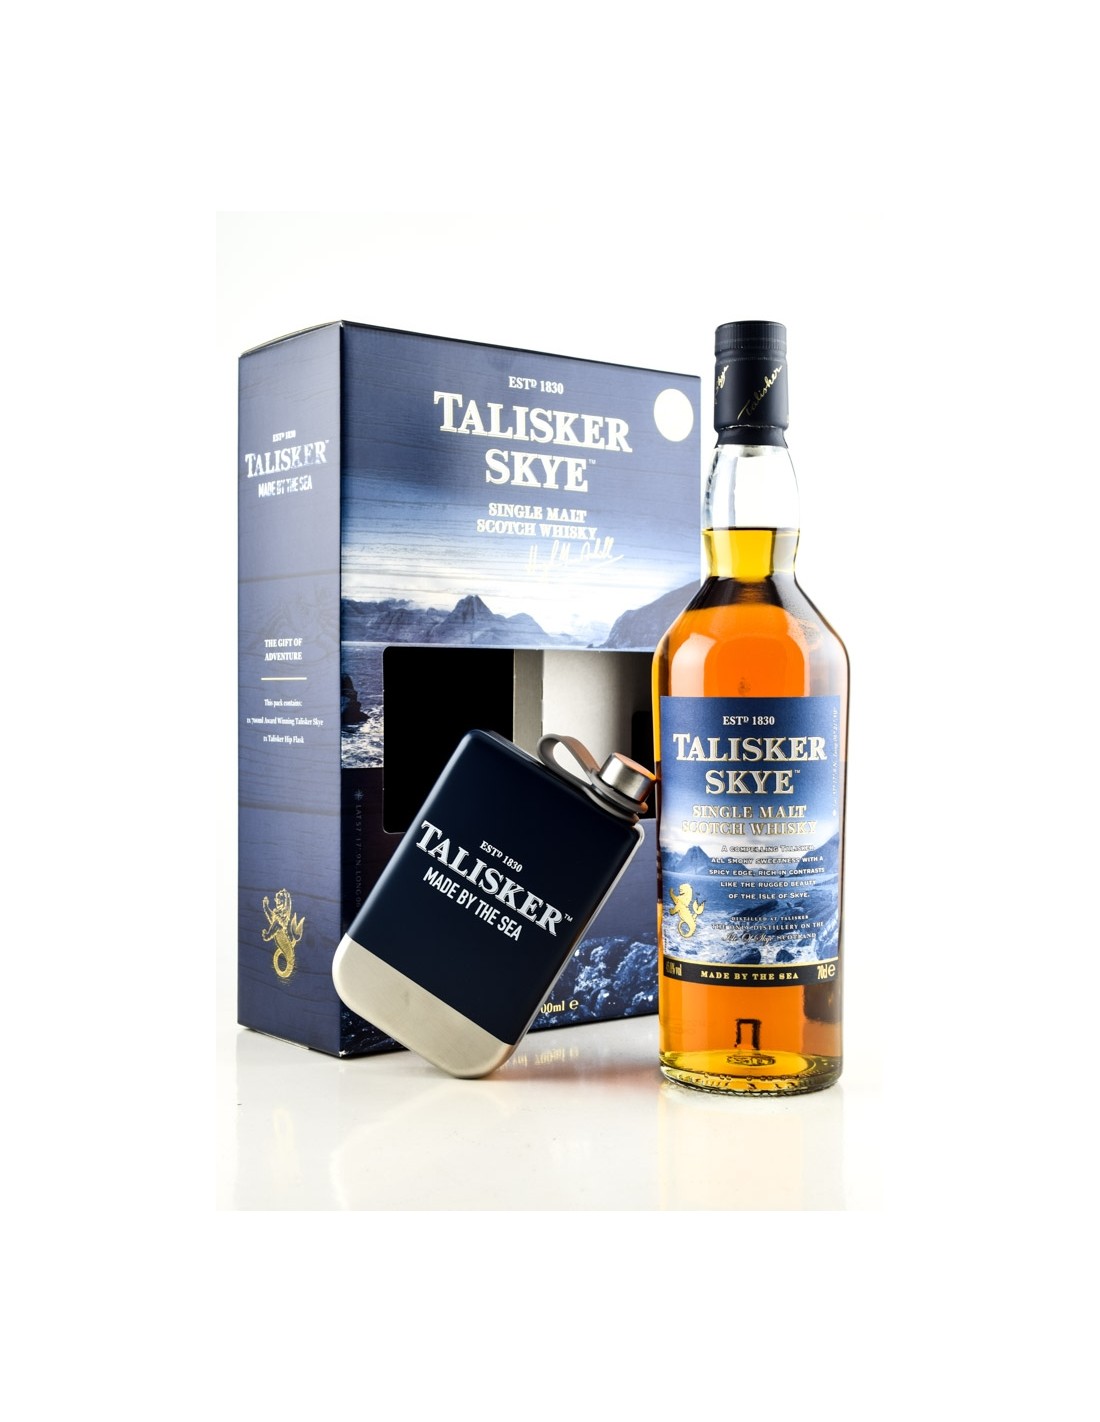 Whisky Talisker Skye + Hipflask, 45.80% alc., 0.7L, Scotia